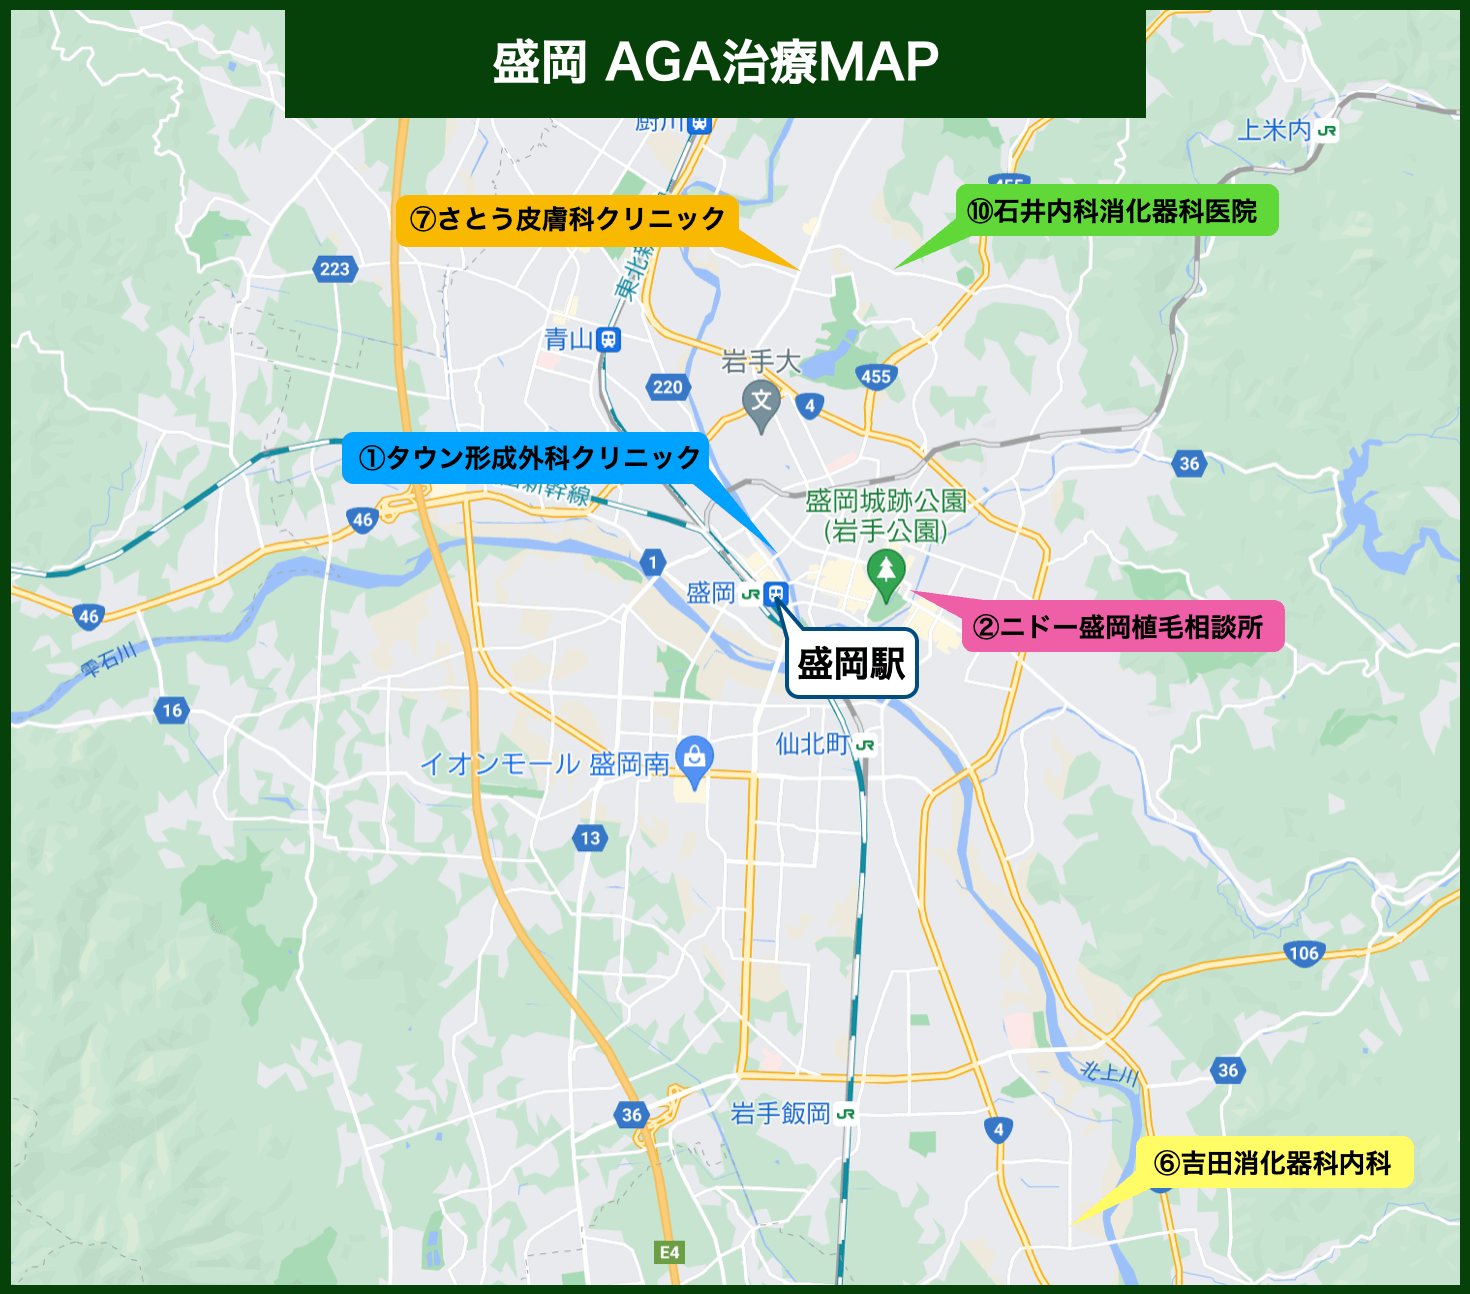 盛岡 AGA治療MAP